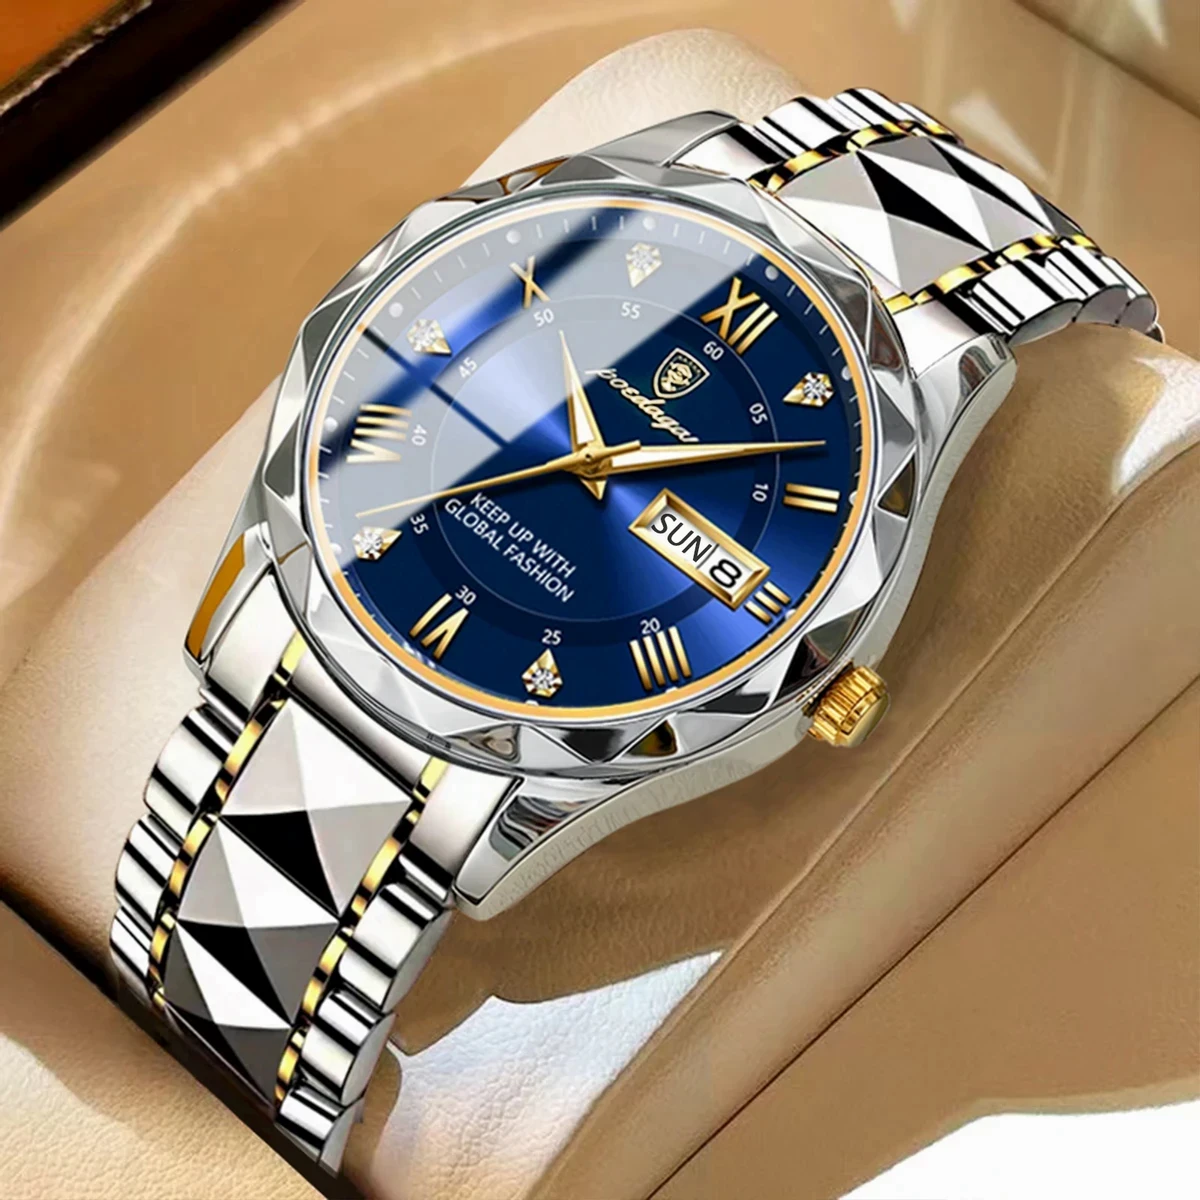 POEDAGAR Luxury Men Watches Business Top Brand Man Wristwatch  Luminous Date Week Quartz Men's Watch High Quality+Box - POEDAGAR MODEL 615 WATCH Toton Ar Dial Blue